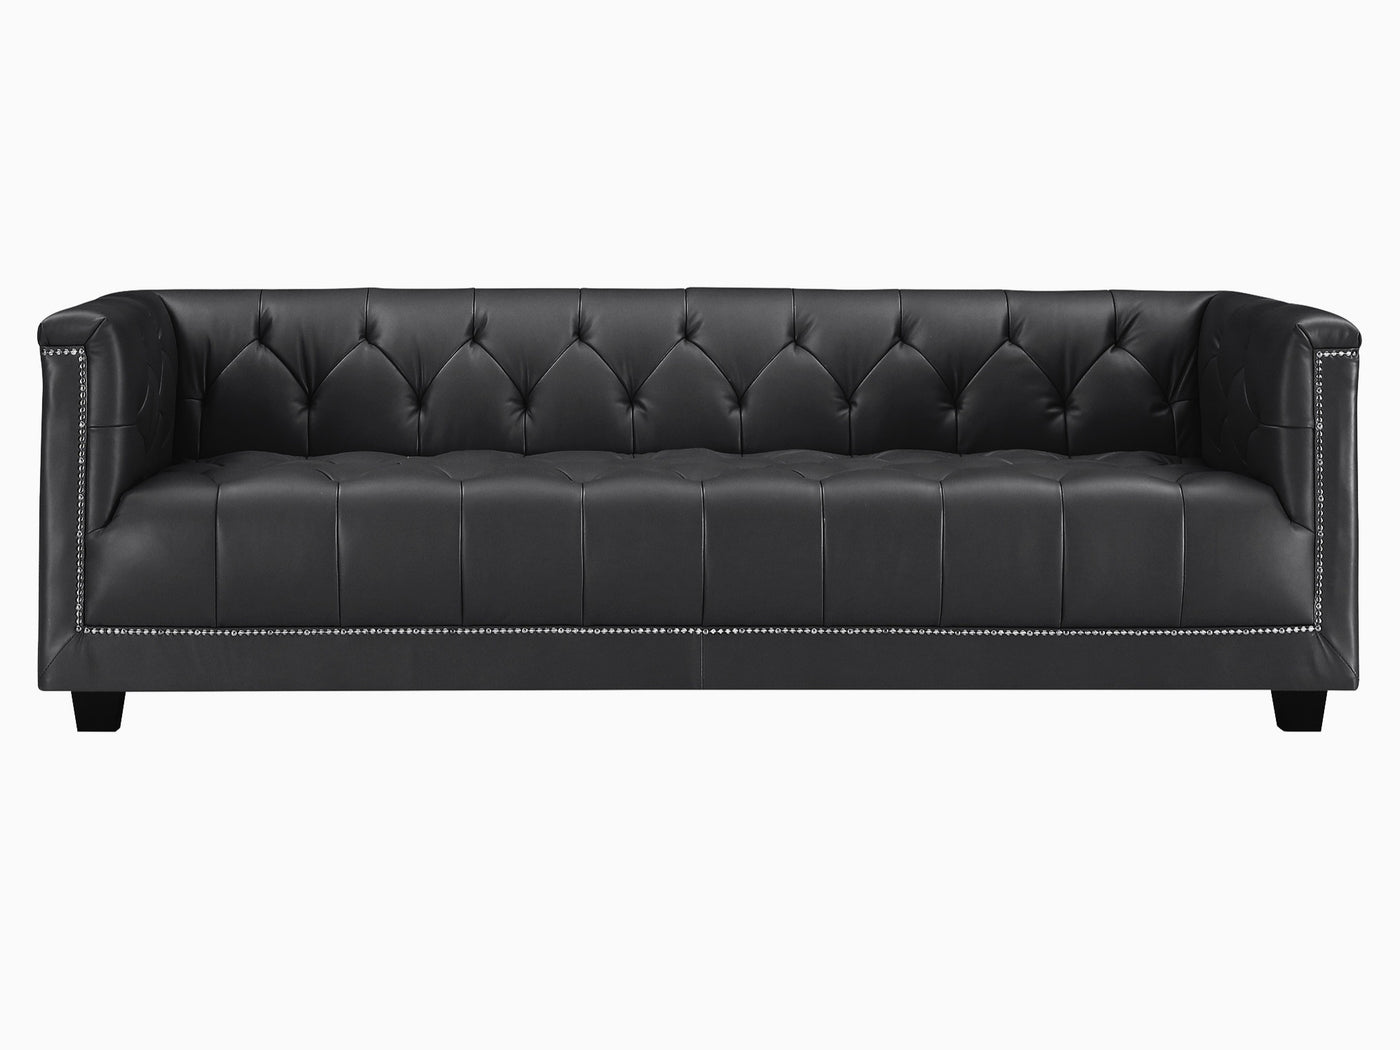 CARDIFF LH5955 Modern Chesterfield Sofa